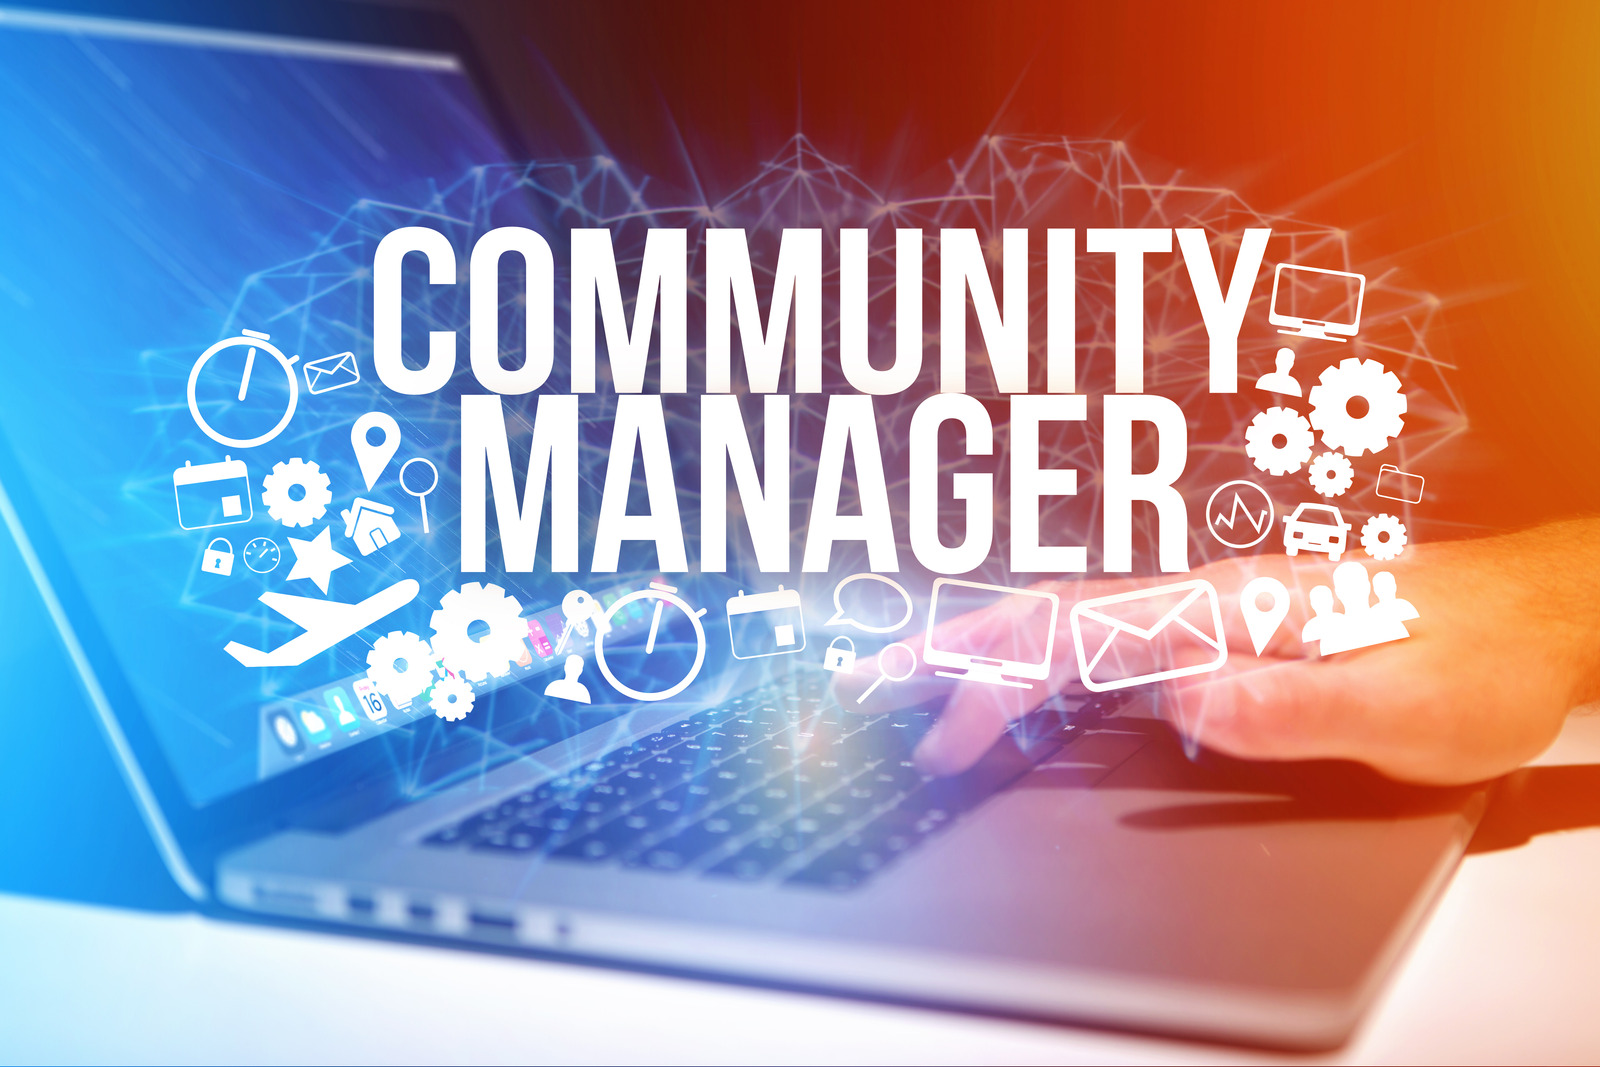 Curso Online de Community Manager